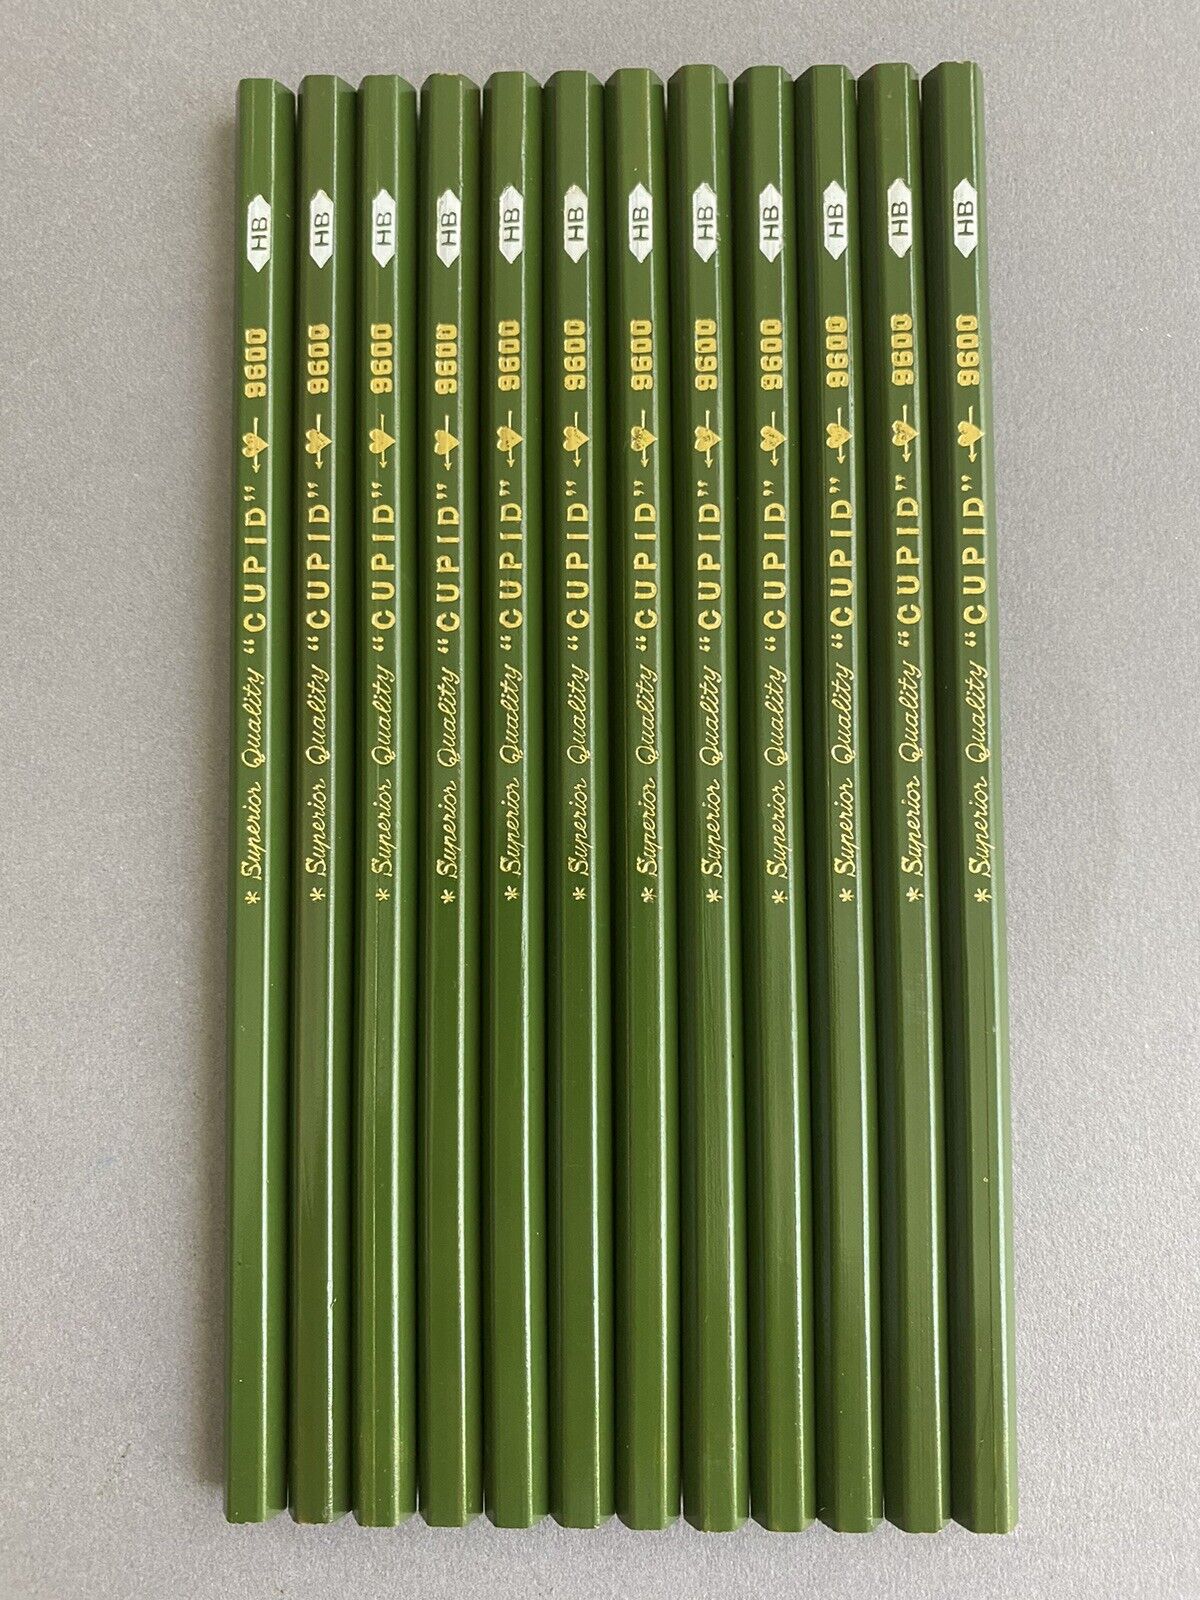 12 Japanese Vintage Pencil CUPID 9600 NOS